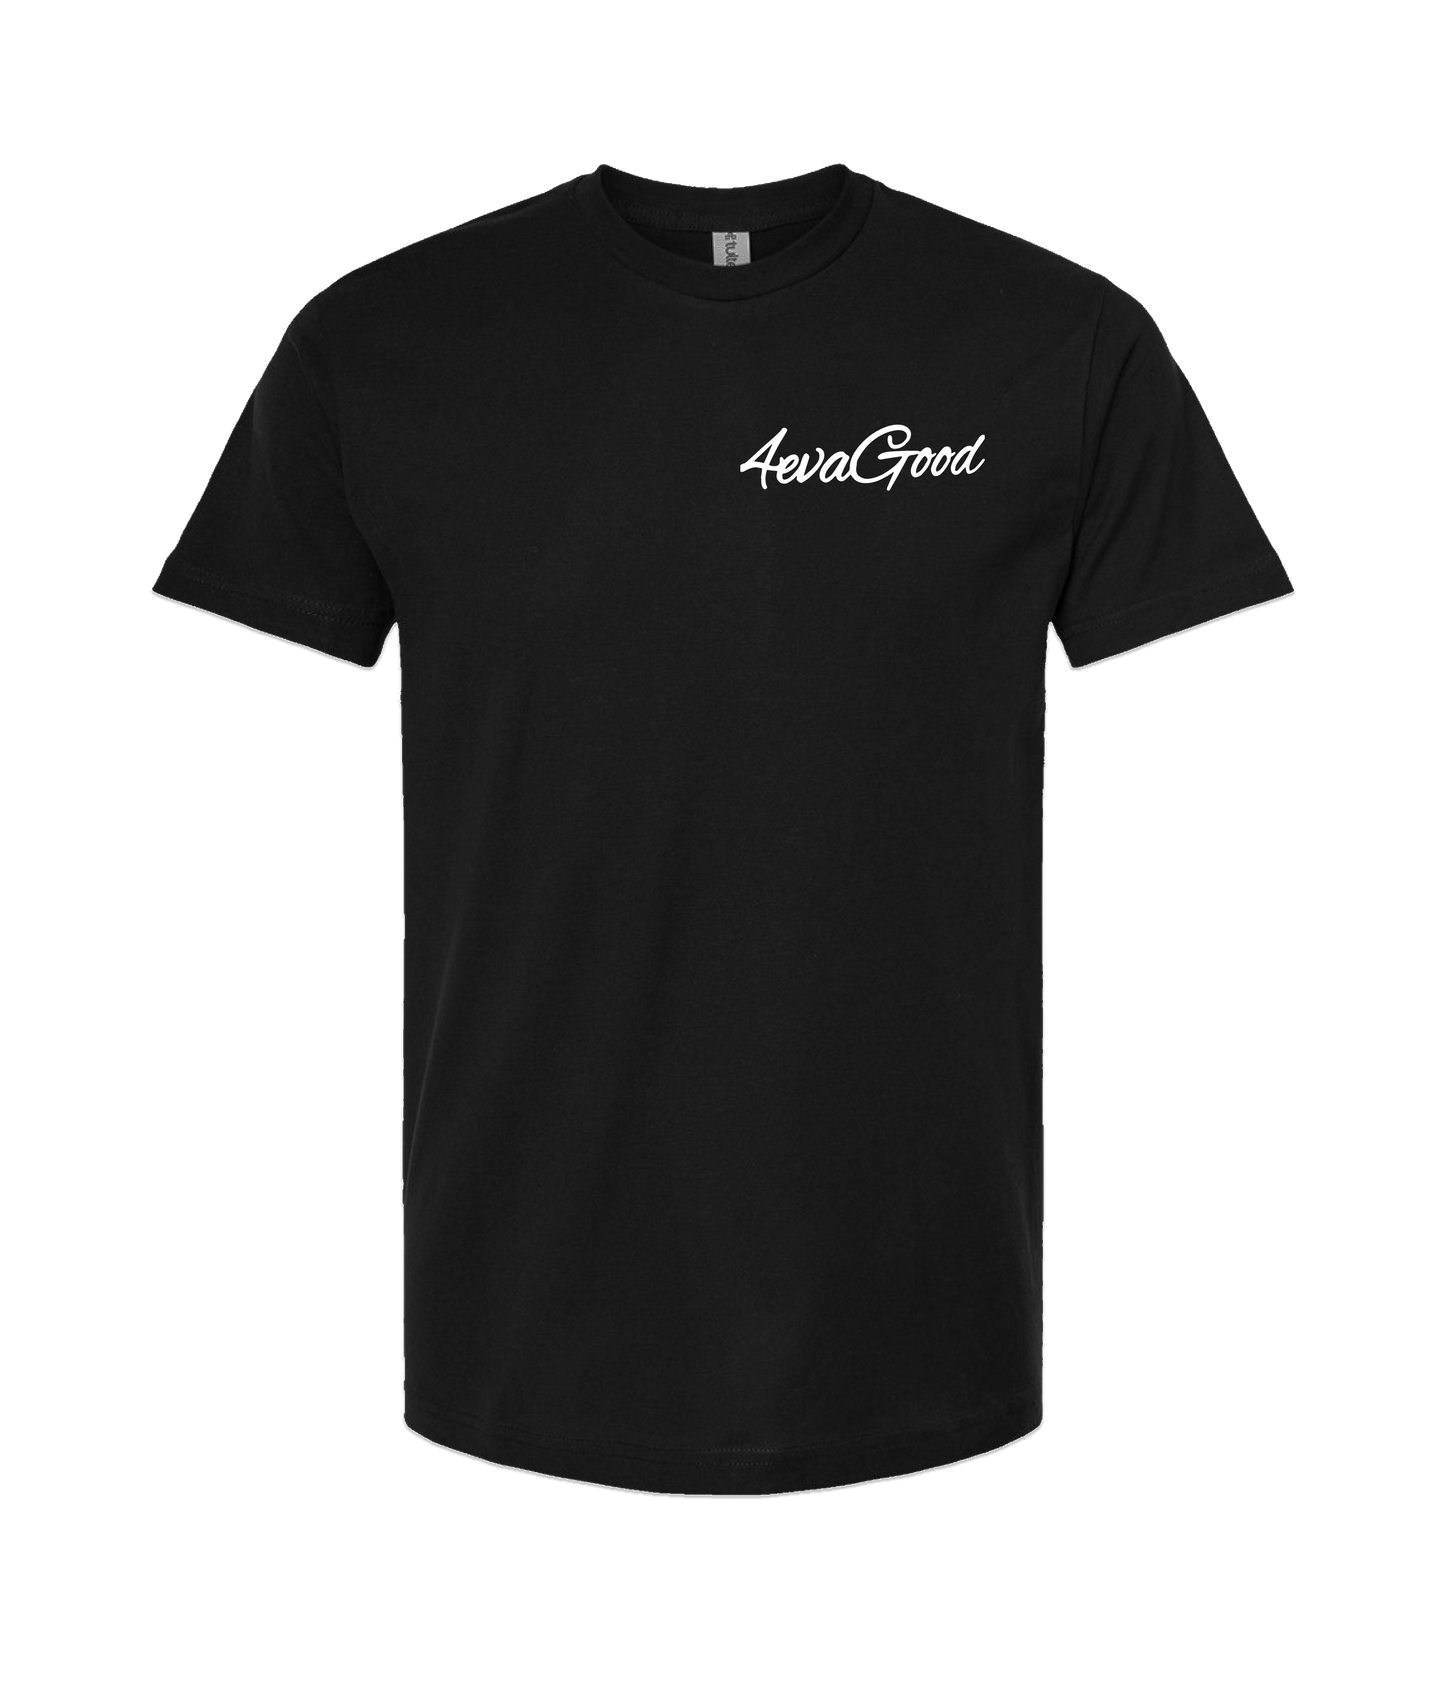 4evaGood - Logo - Black T-Shirt